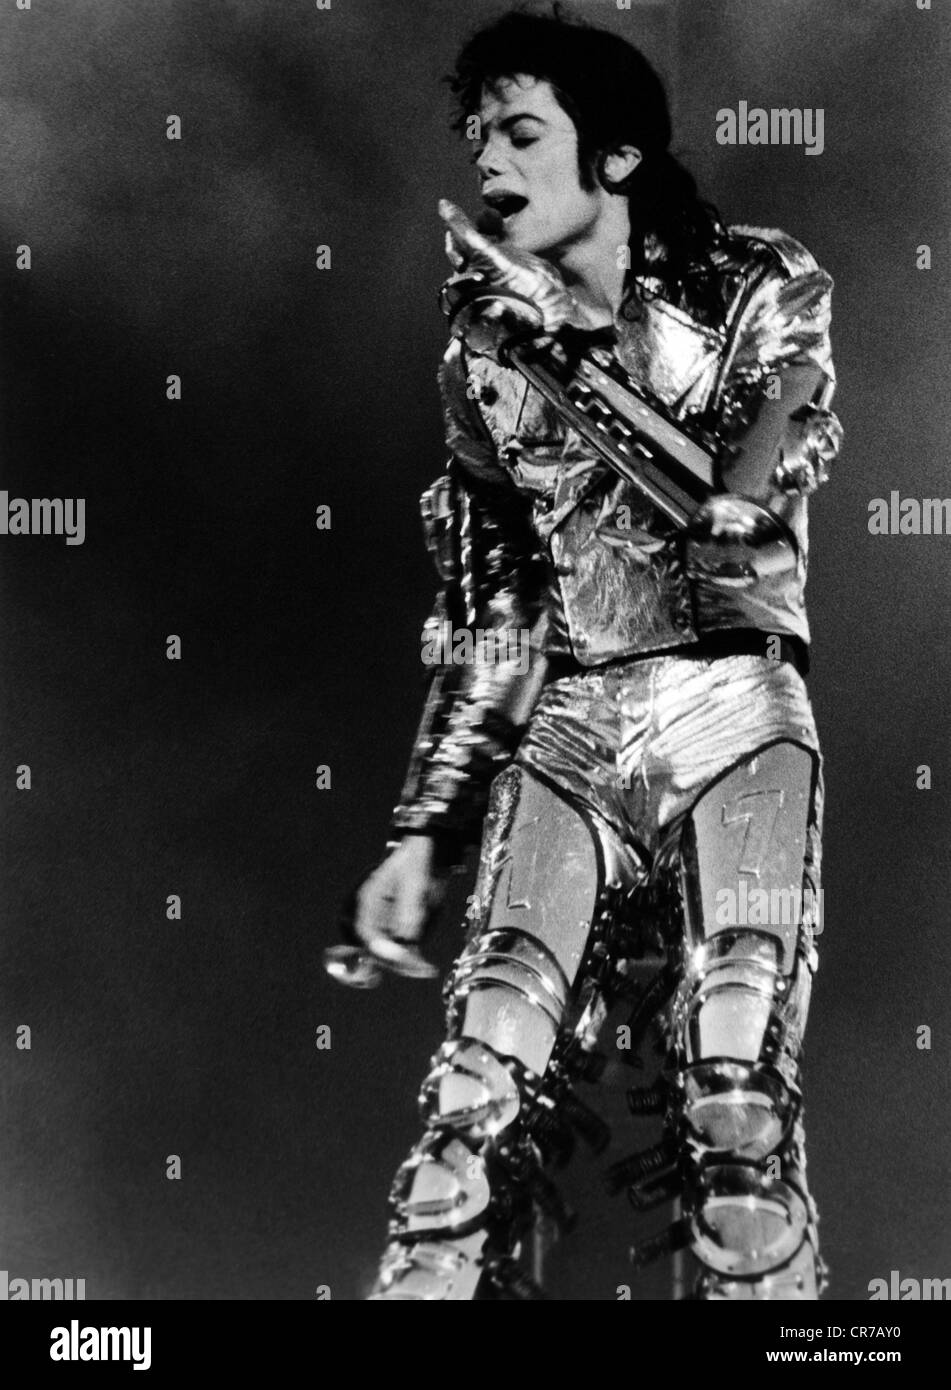 Jackson, Michael, 29.8.1958 - 25.6.2009, American musician (pop singer), half length, during concert gig, HIStory world tour, Hockenheim, Germany, 1997, , Stock Photo